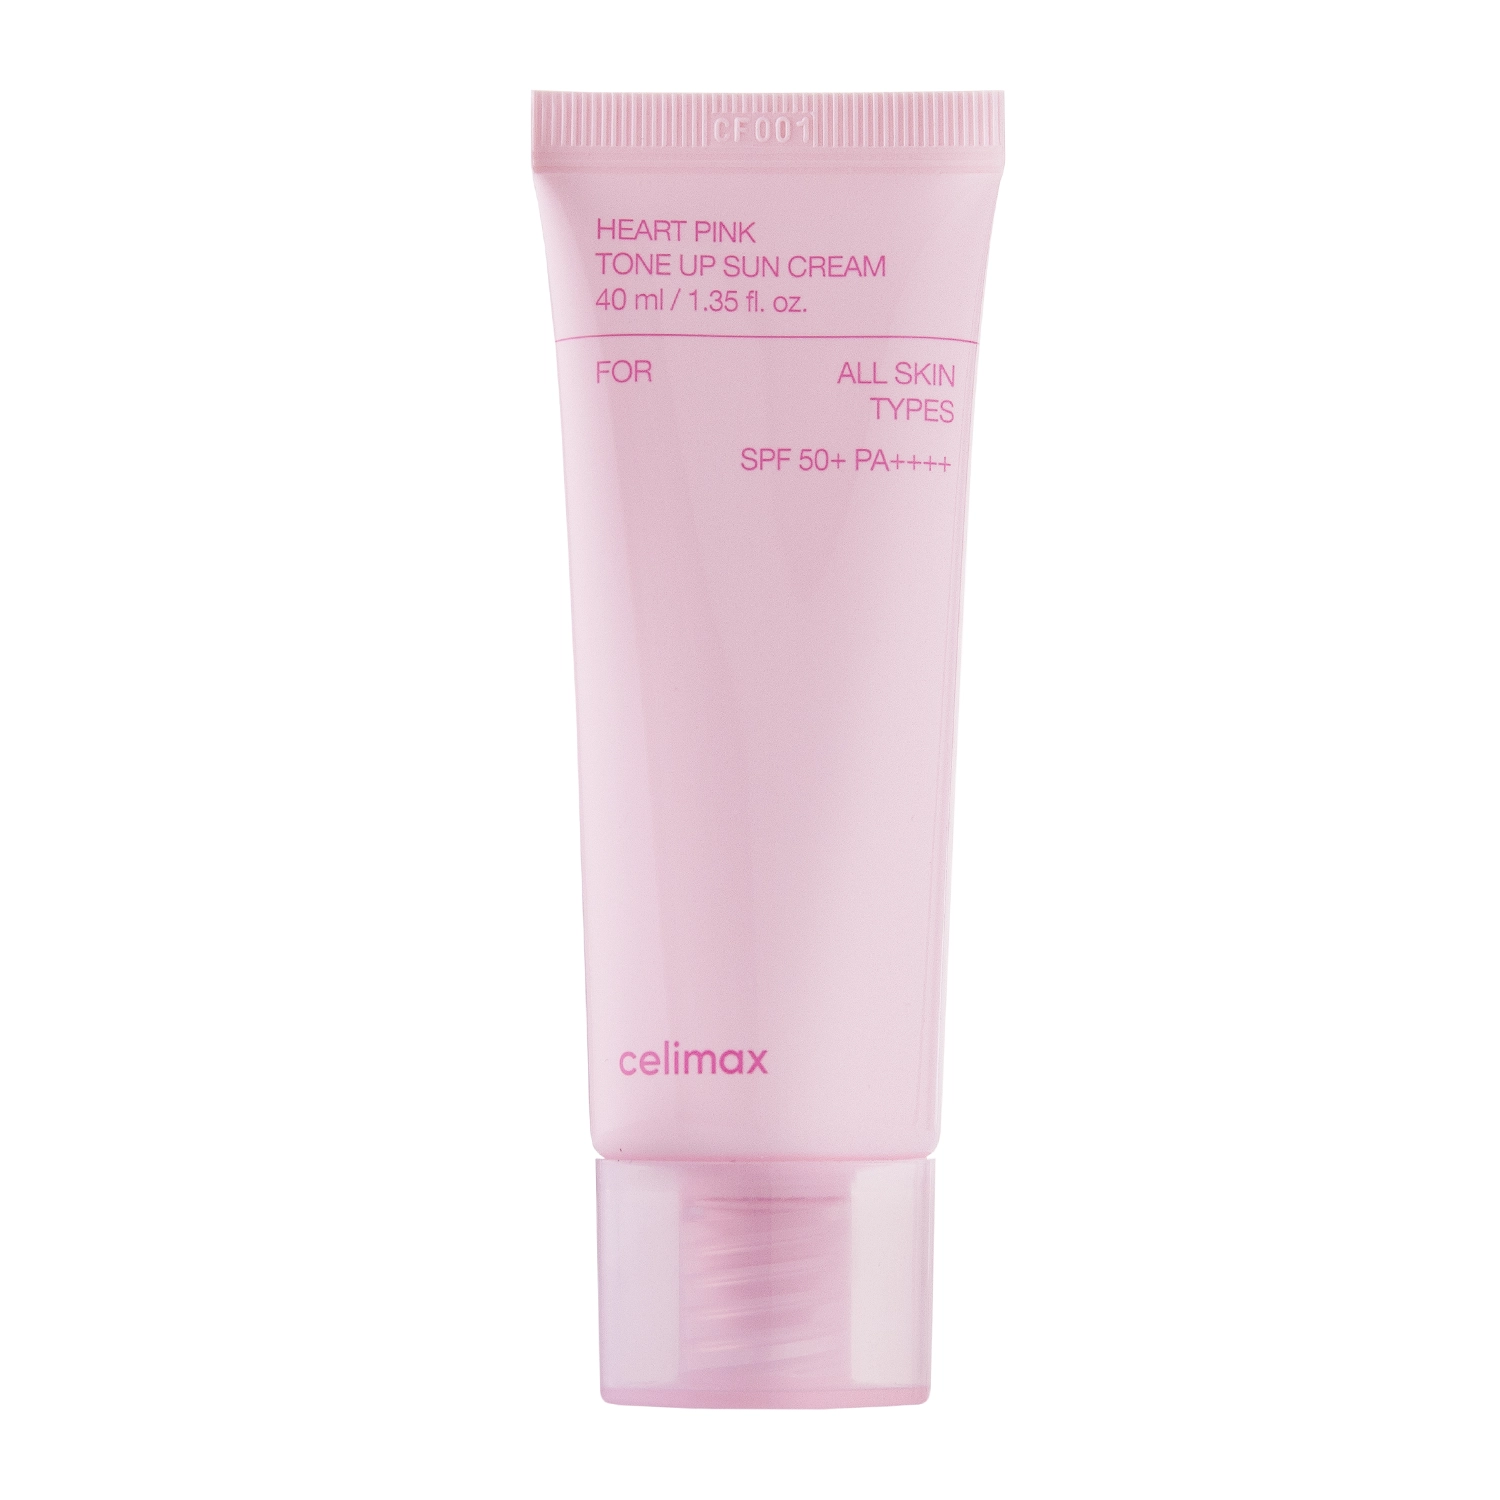 Celimax - Heart Pink Tone Up Sun Cream SPF 50+ PA++++ - Feuchtigkeitsspendende Filtercreme - 40ml